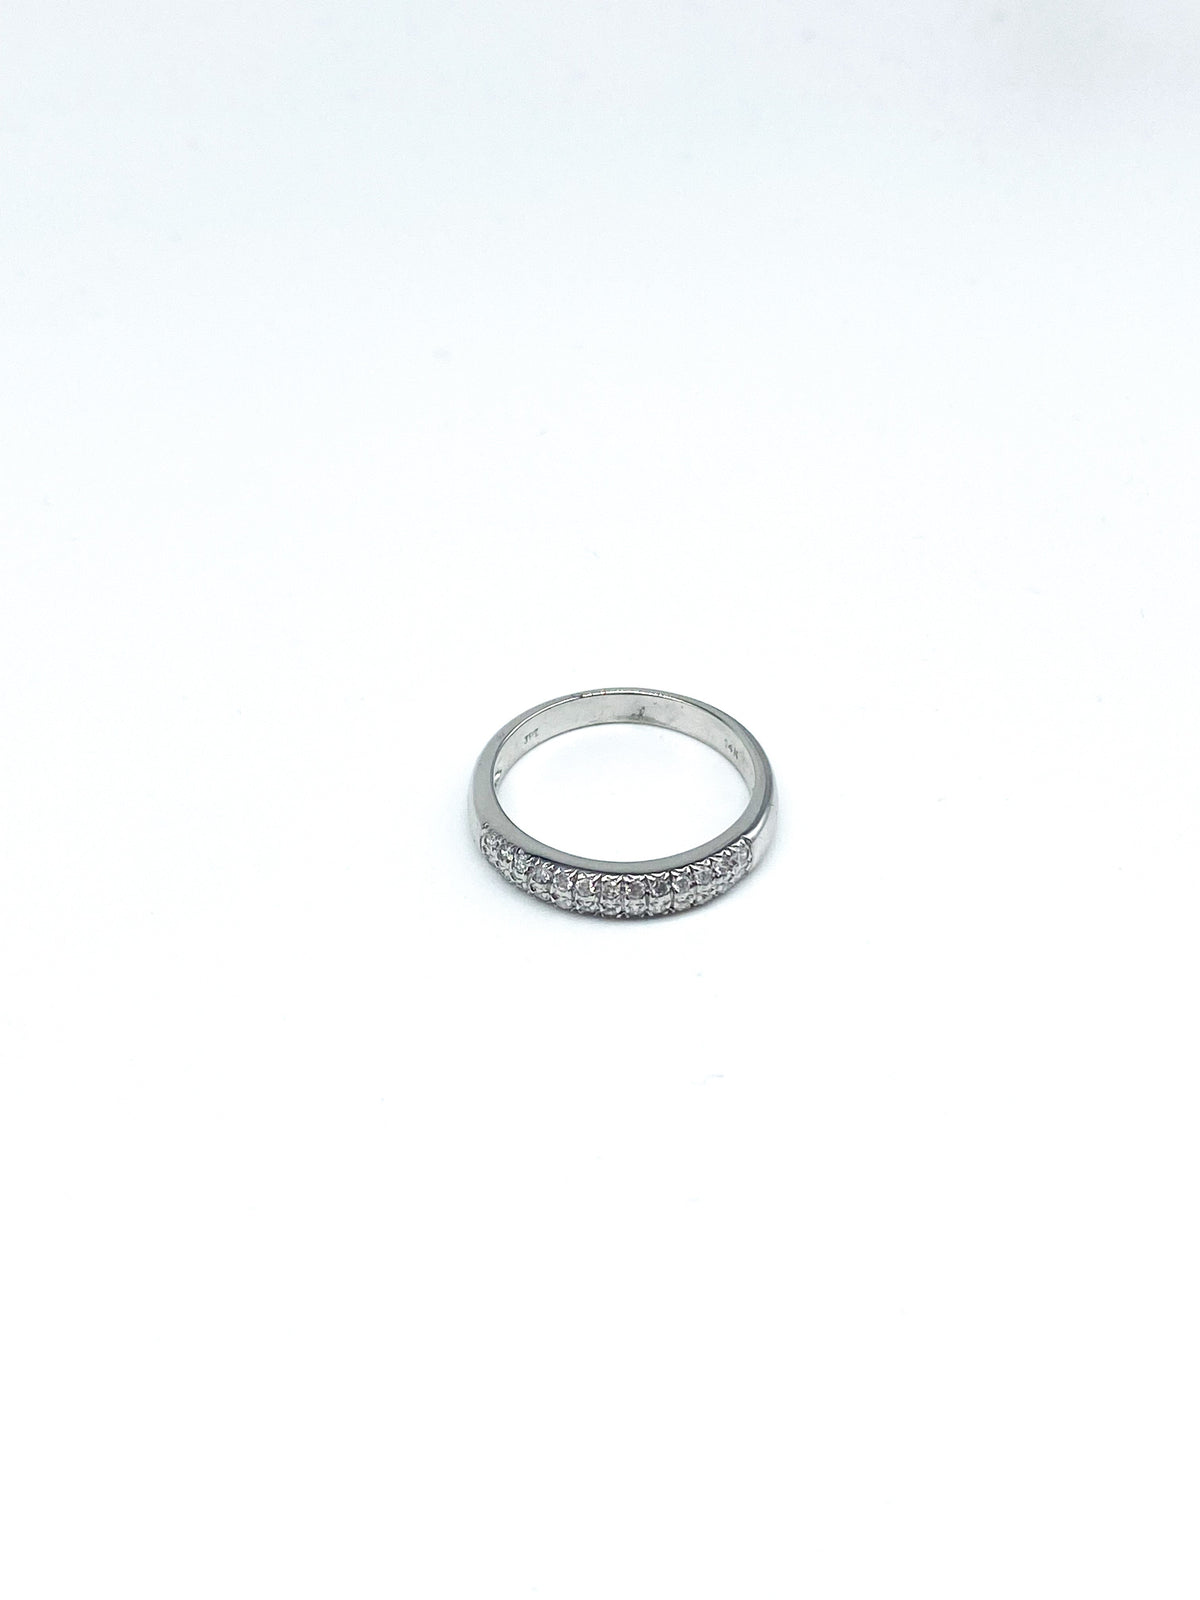 .25 Point Round Brilliant Cut Diamond Ring